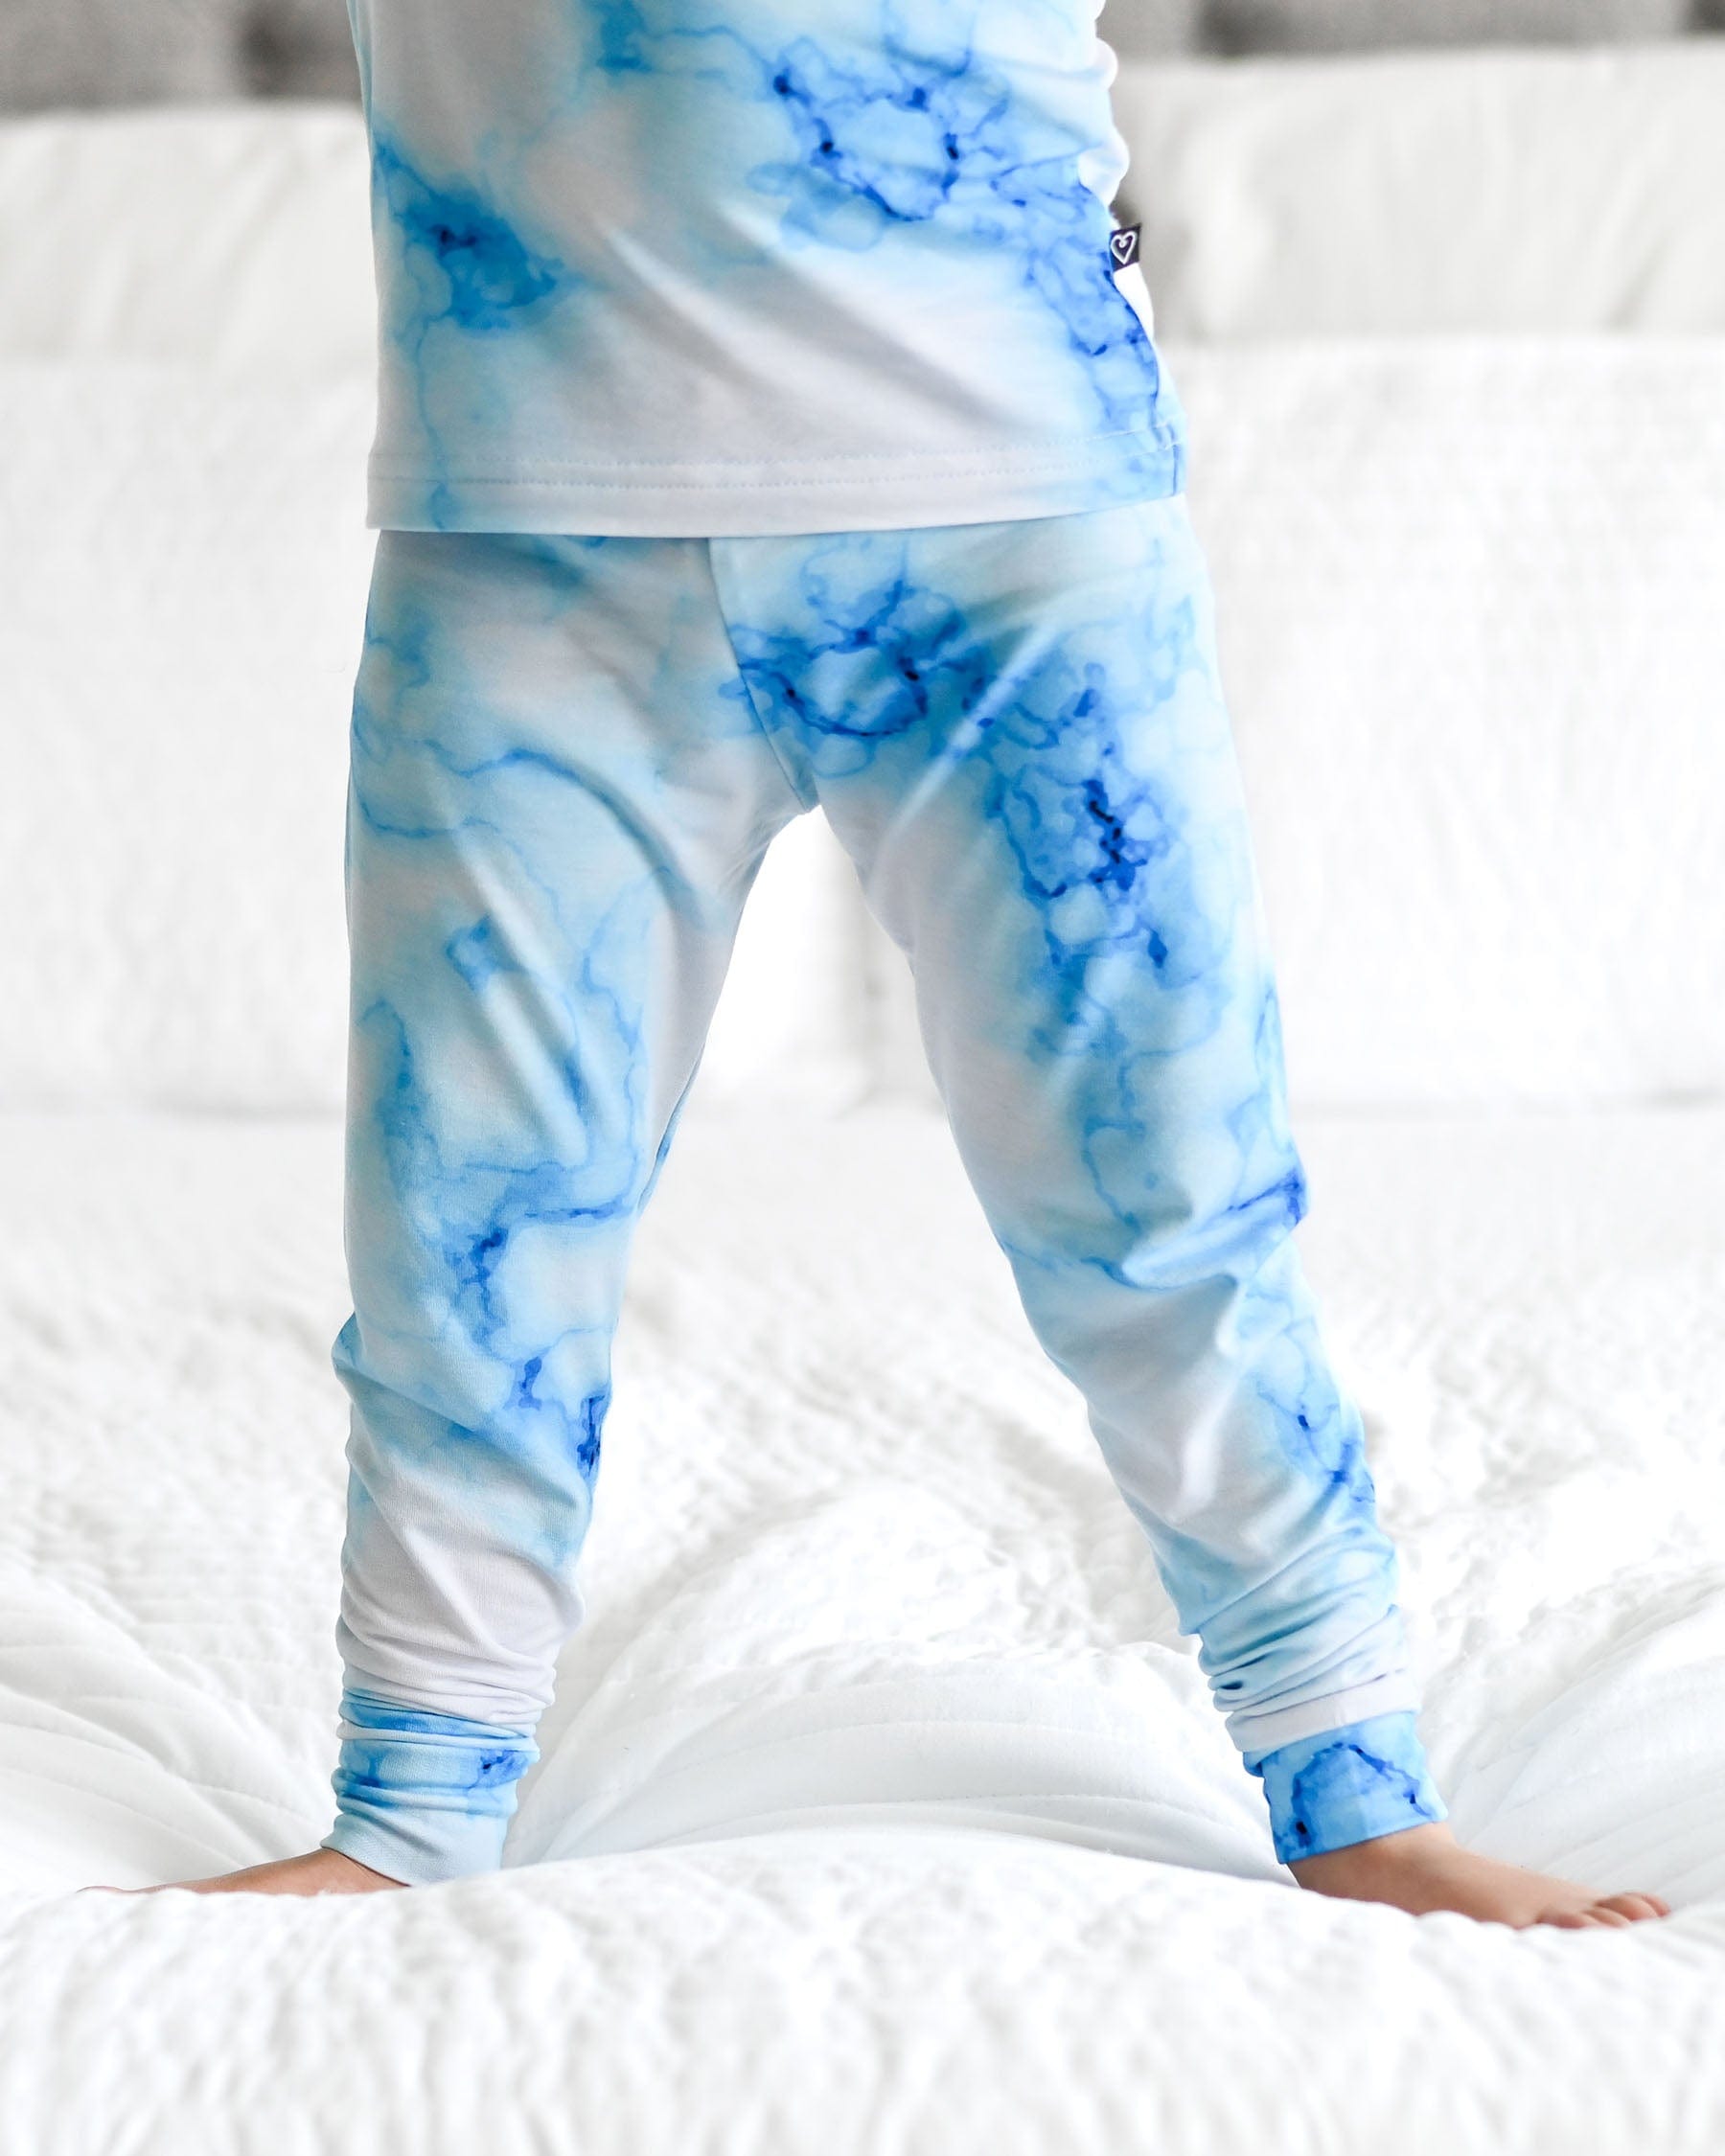 Blue Marble Pajama Set